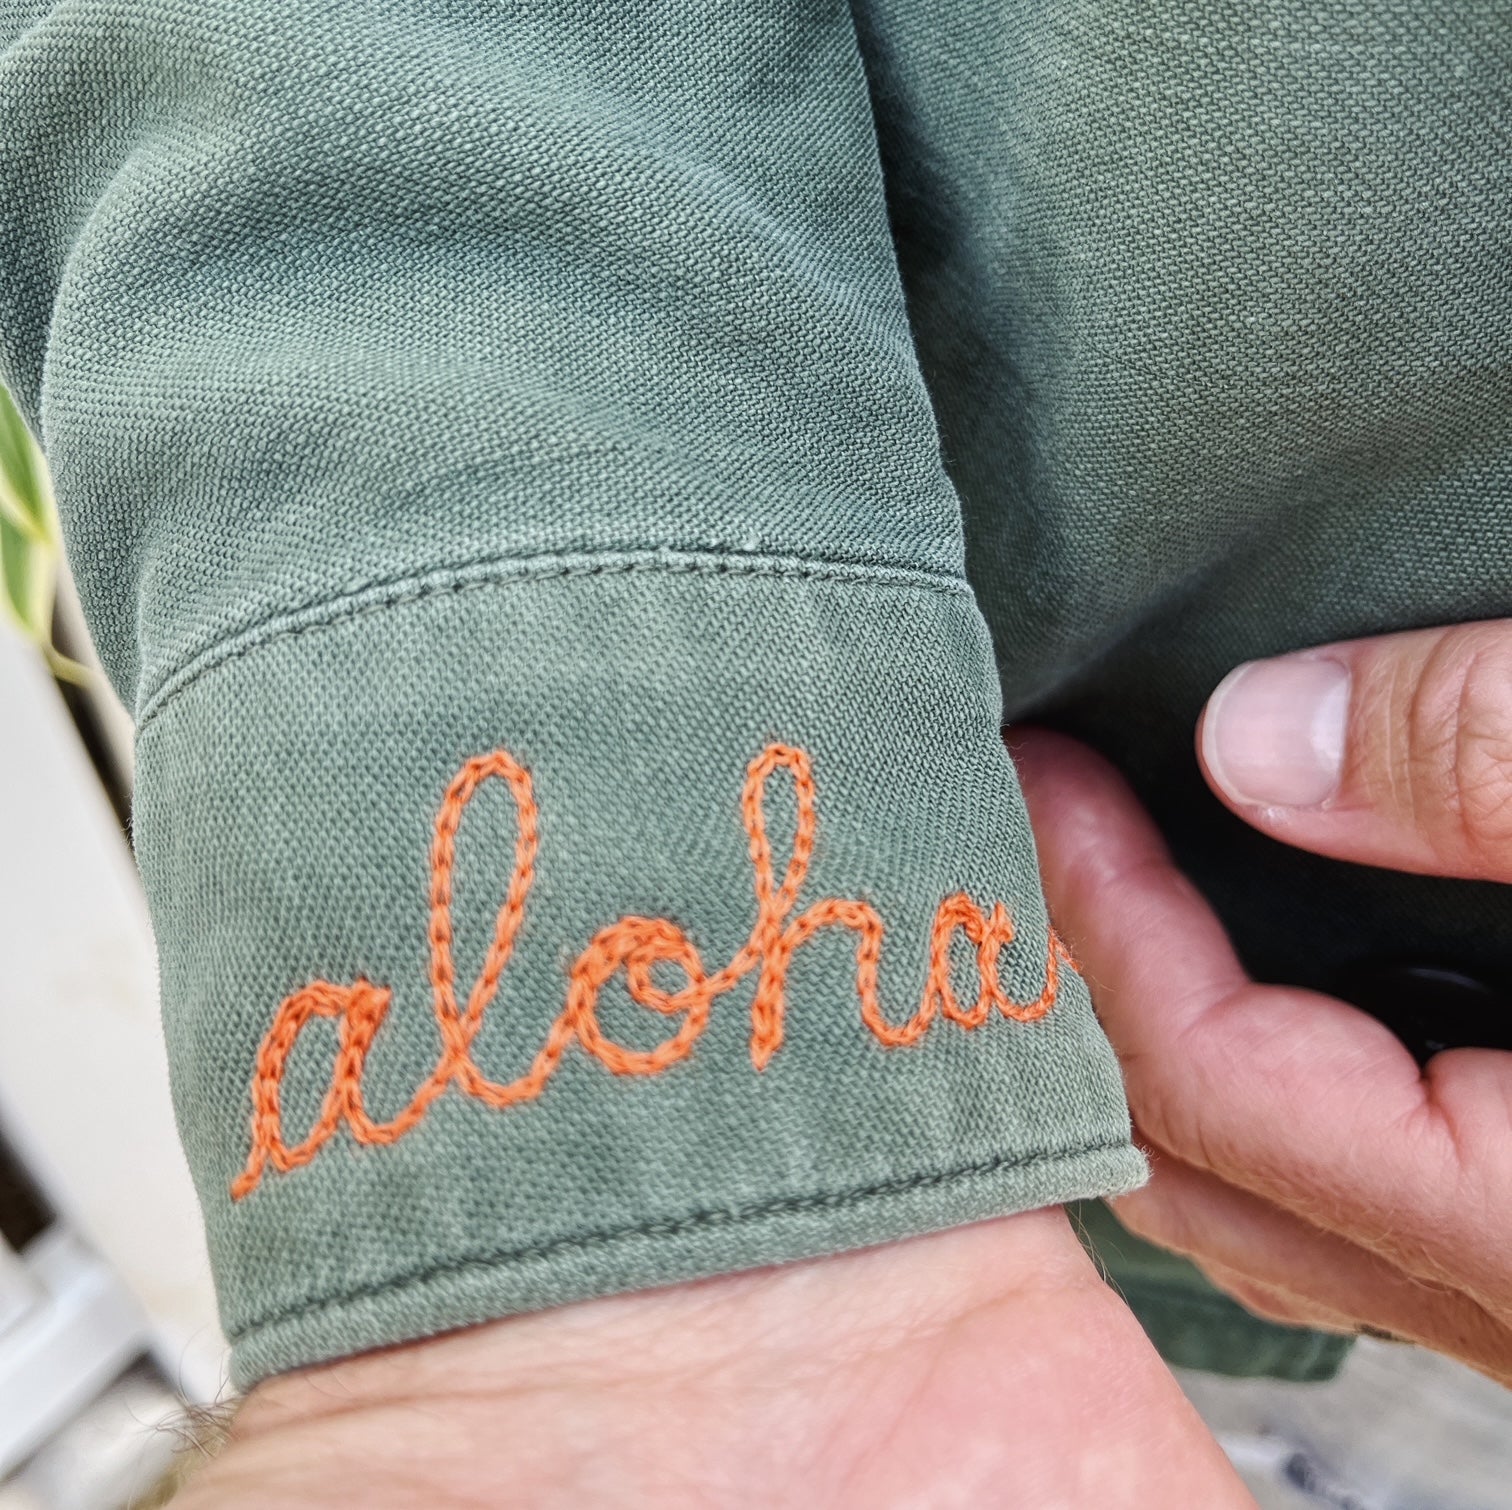 Cuff Aloha Hawaii Vintage Chain Stitch Jacket collaboration Nick Kuchar The Honolulu Social Club